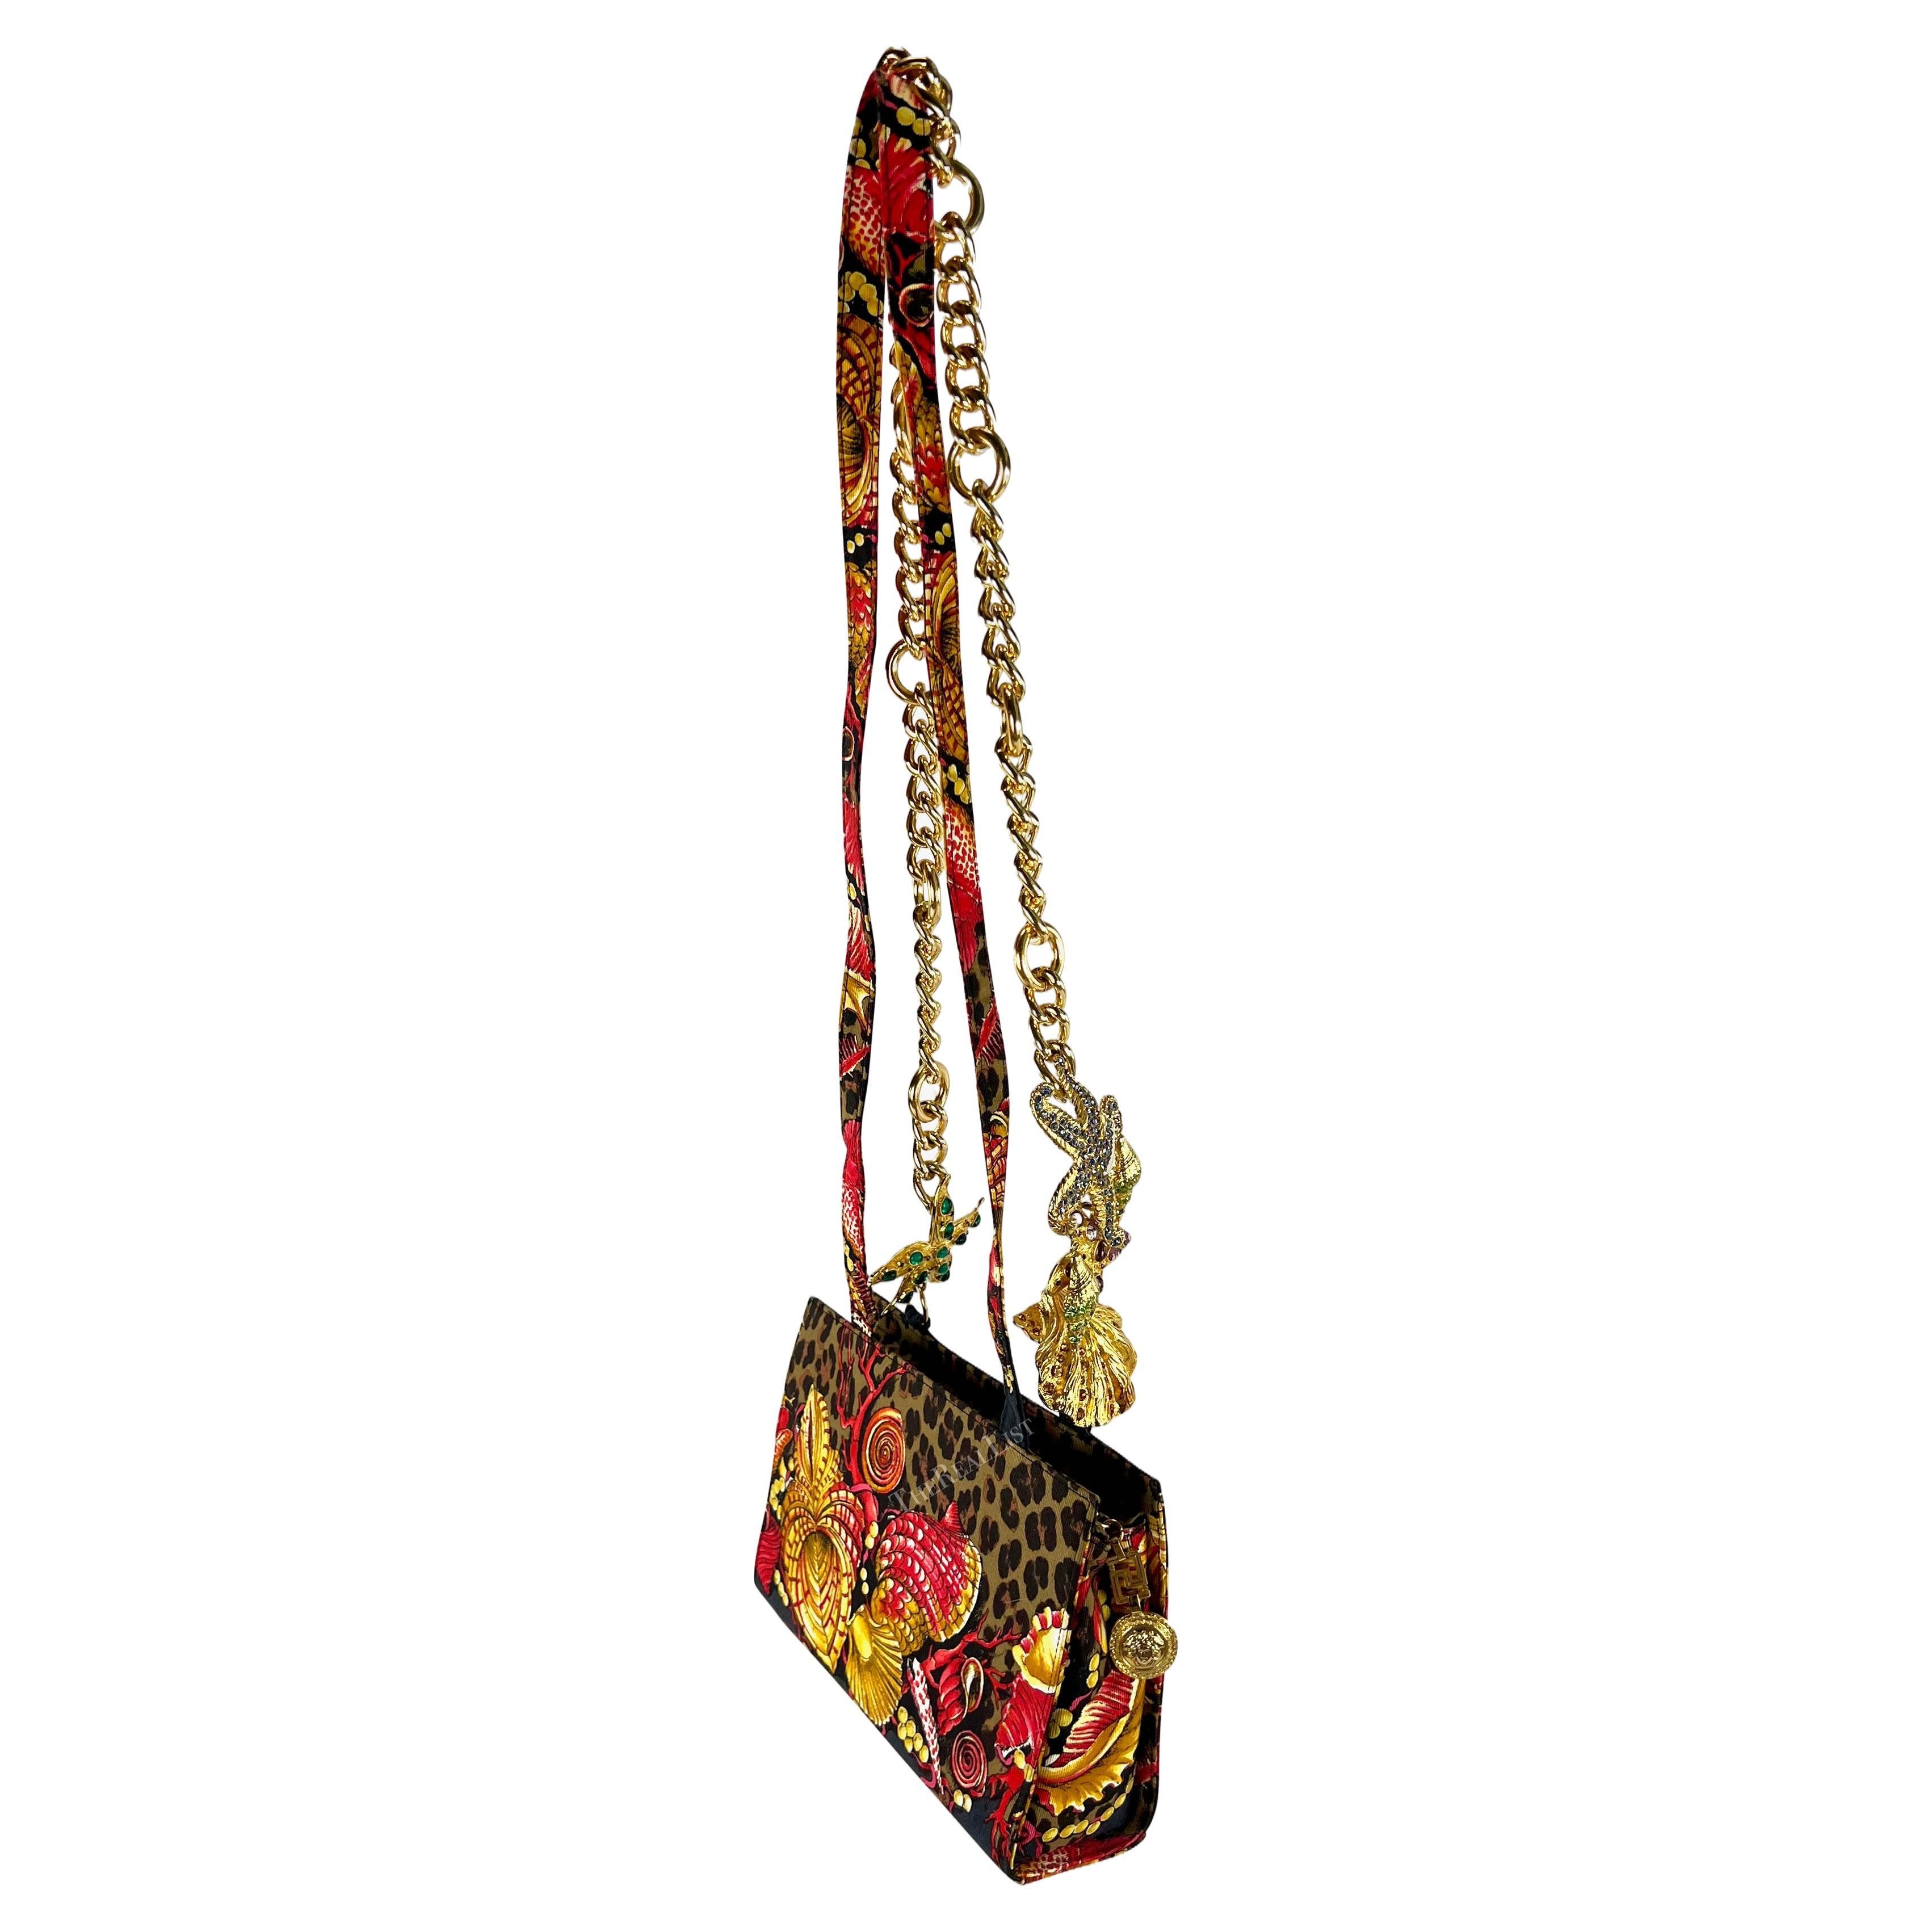 S/S 1992 Gianni Versace Runway Rhinestone Gold Shell Jewel Chain Crossbody Bag  For Sale 9